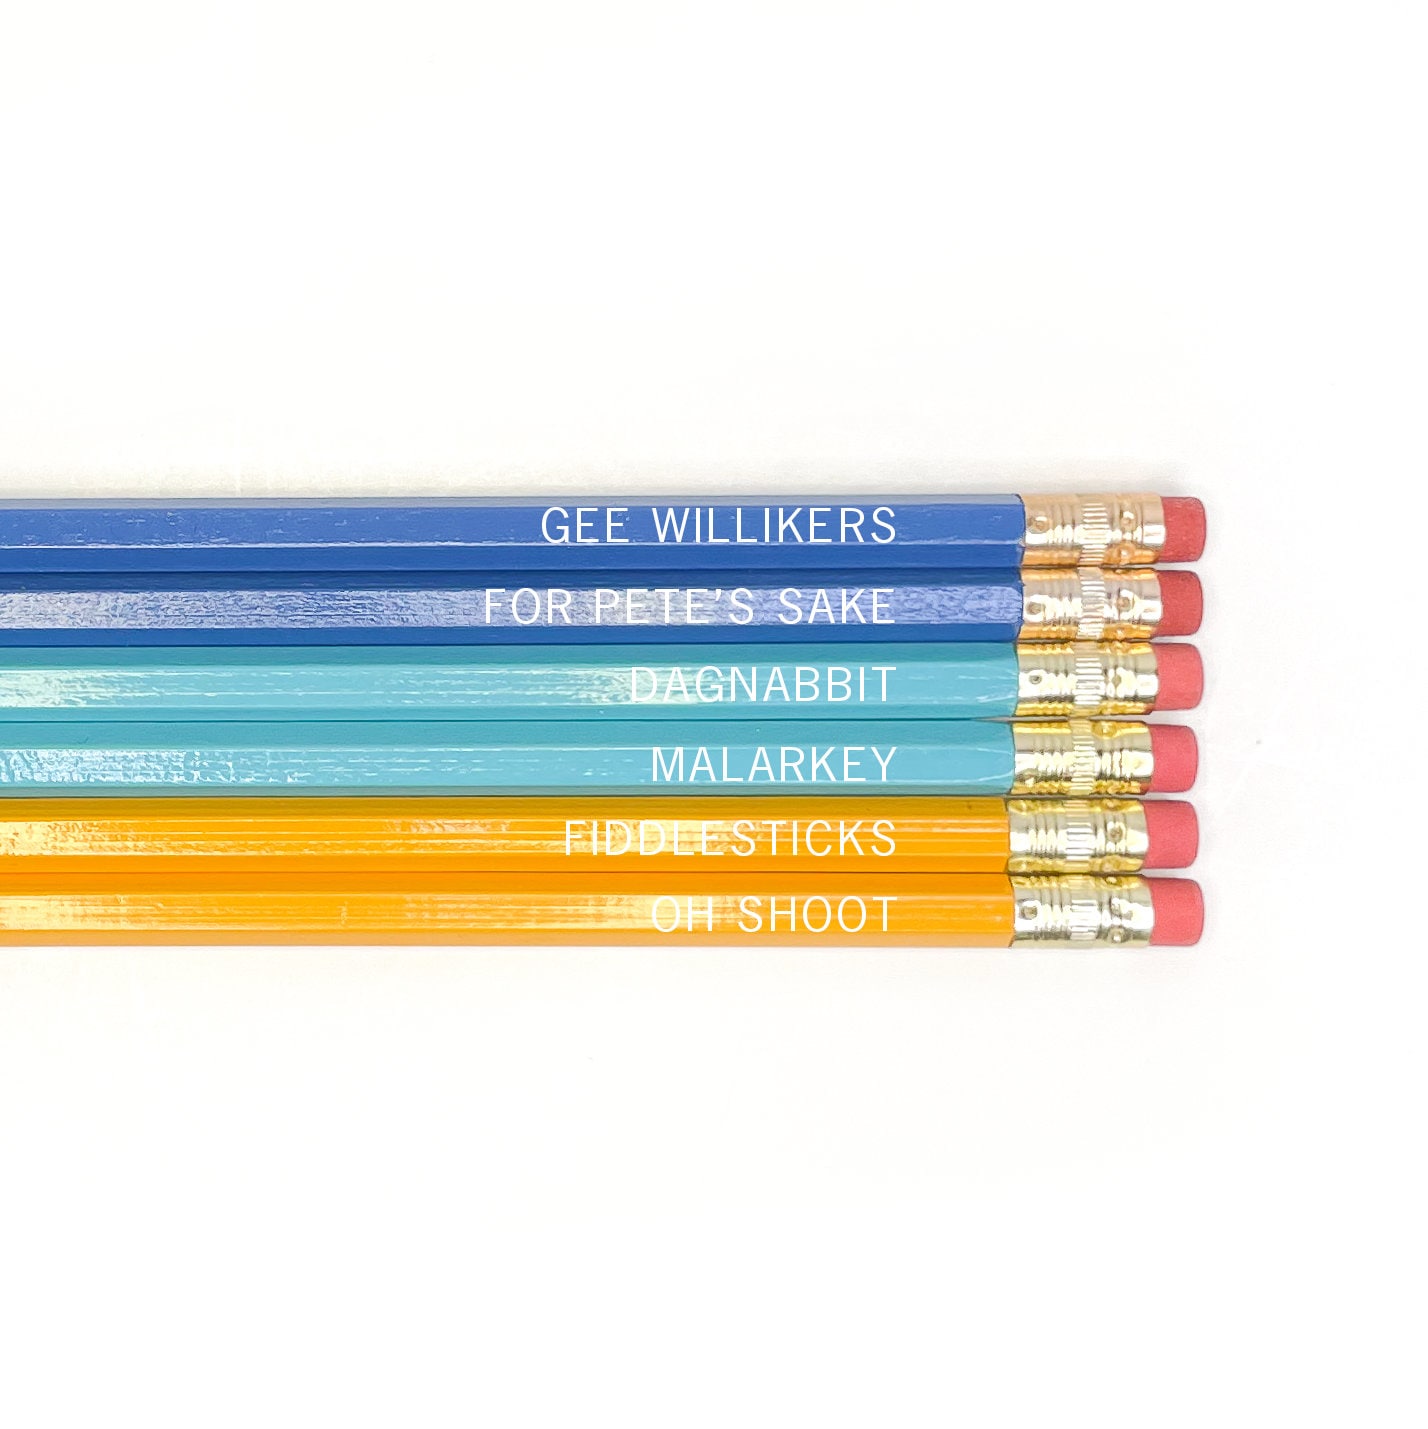 Adult Humor Pencils, Gag Gift Engraved Pencils, Funny Pencils